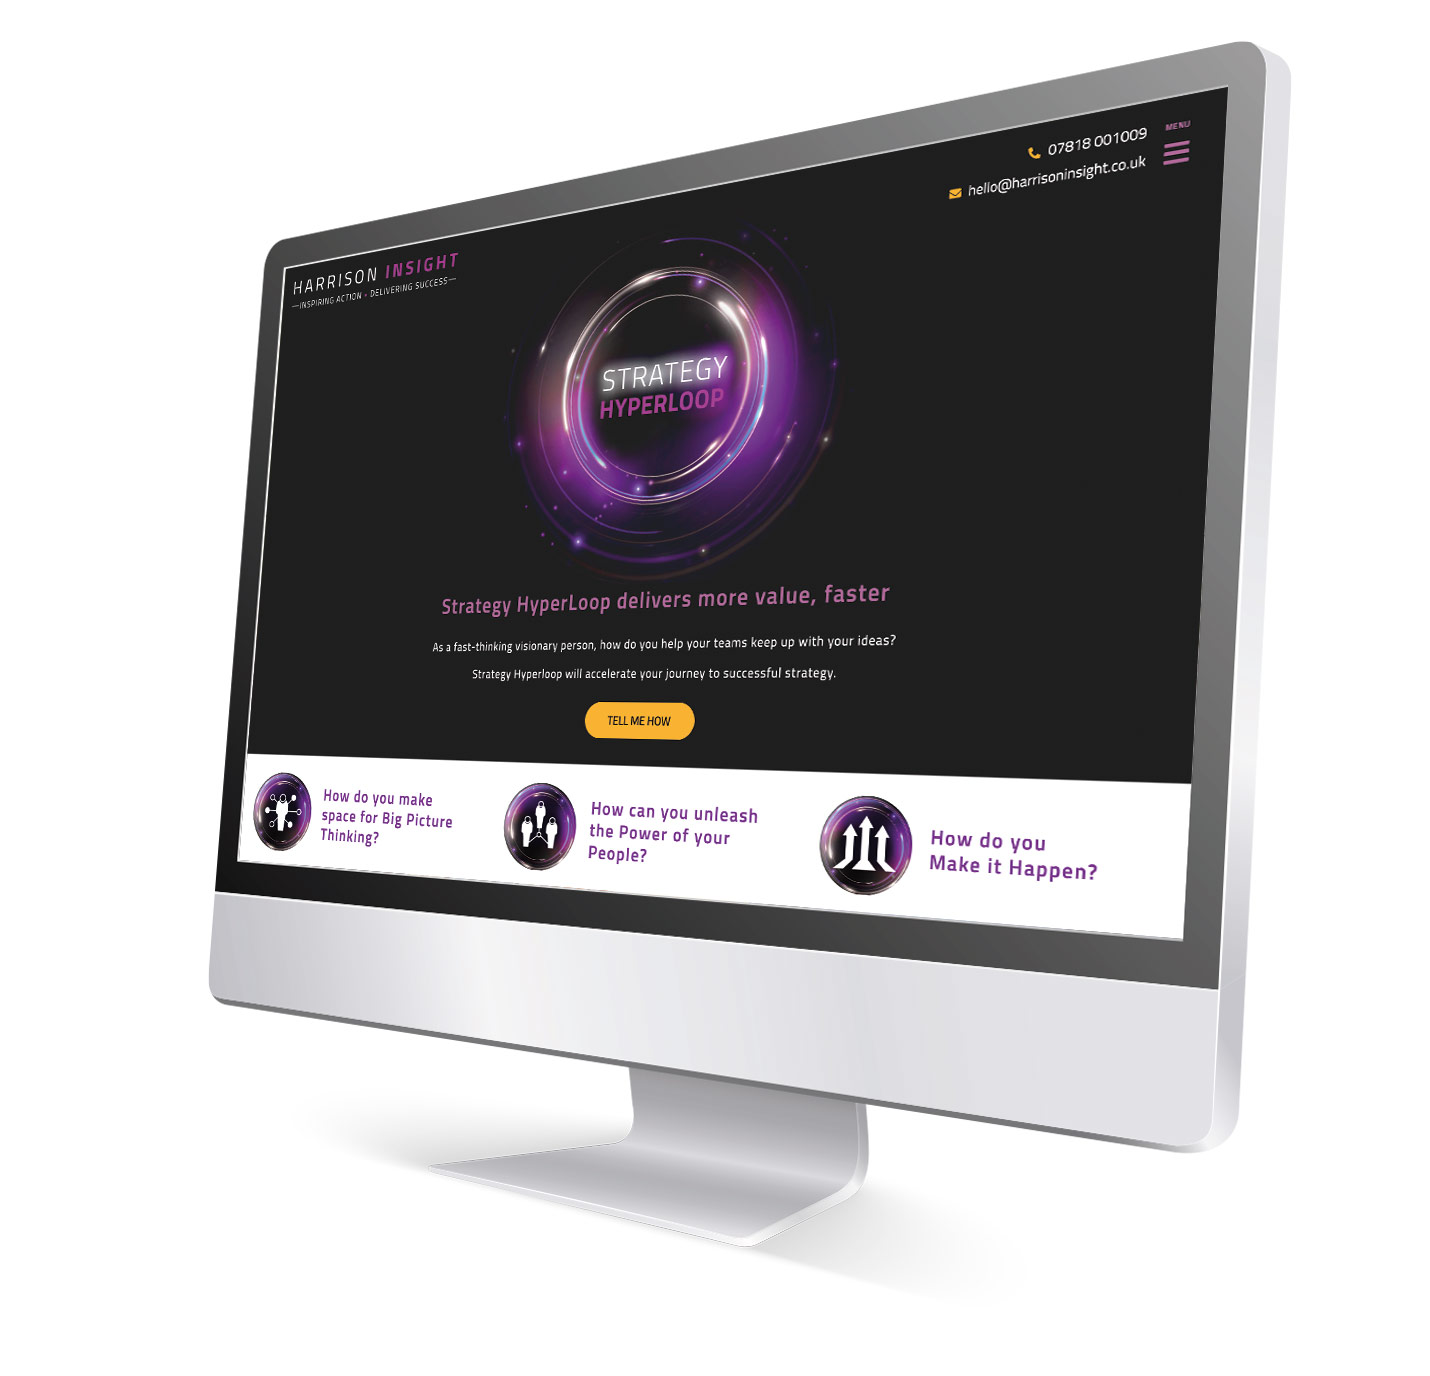 Harrison Insight Strategy Hyperloop website design and development